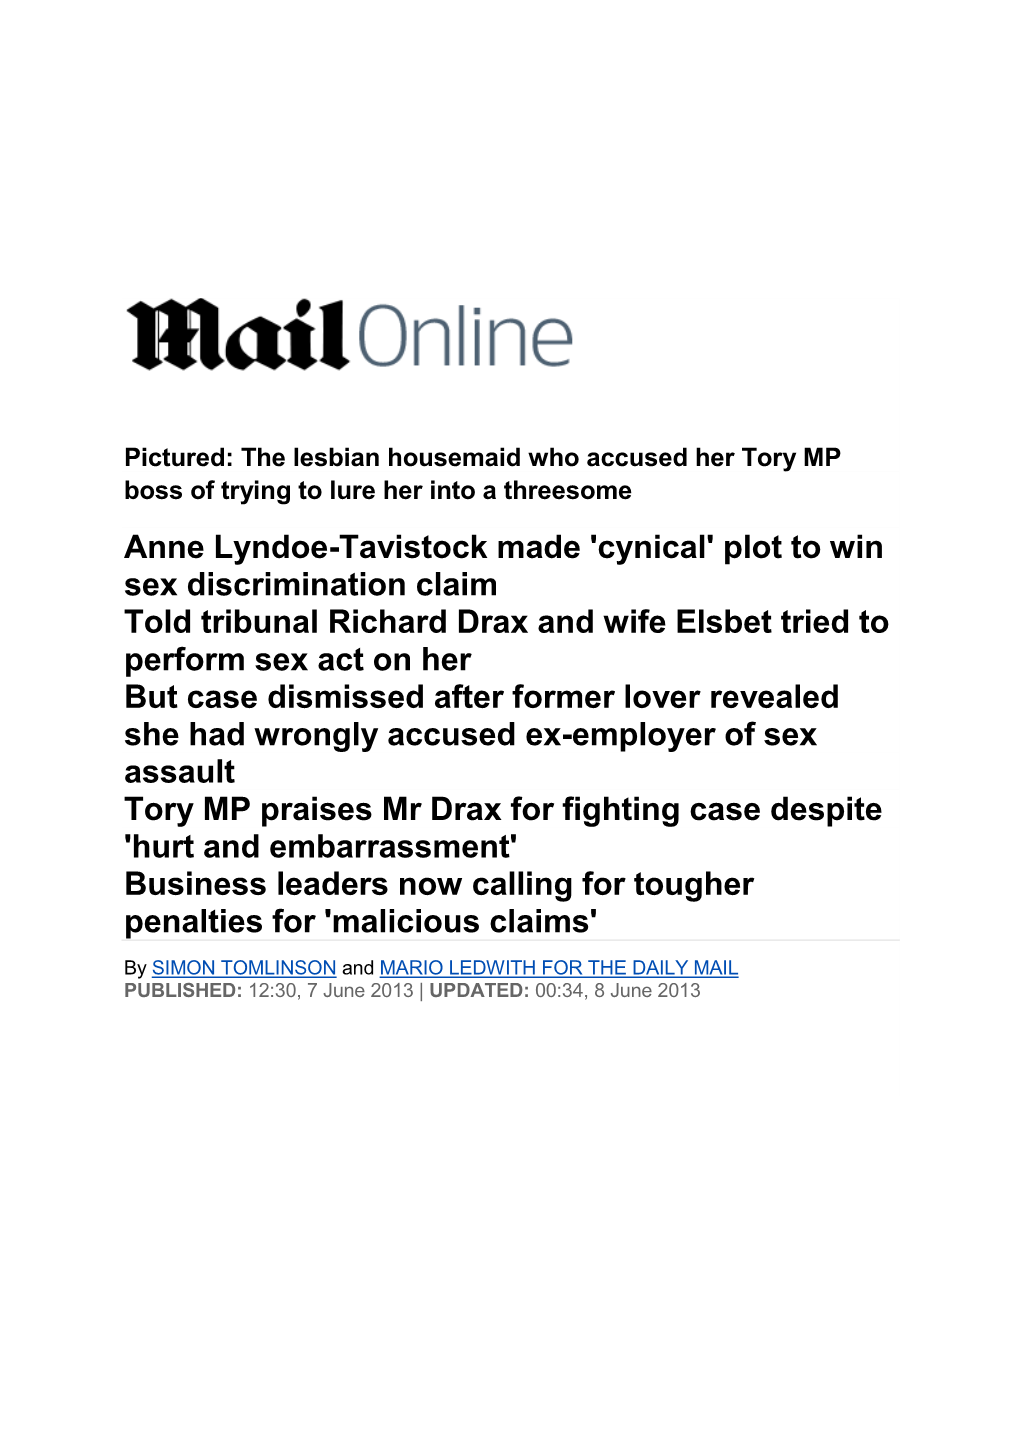 Anne Lyndoe-Tavistock Made 'Cynical' Plot to Win Sex